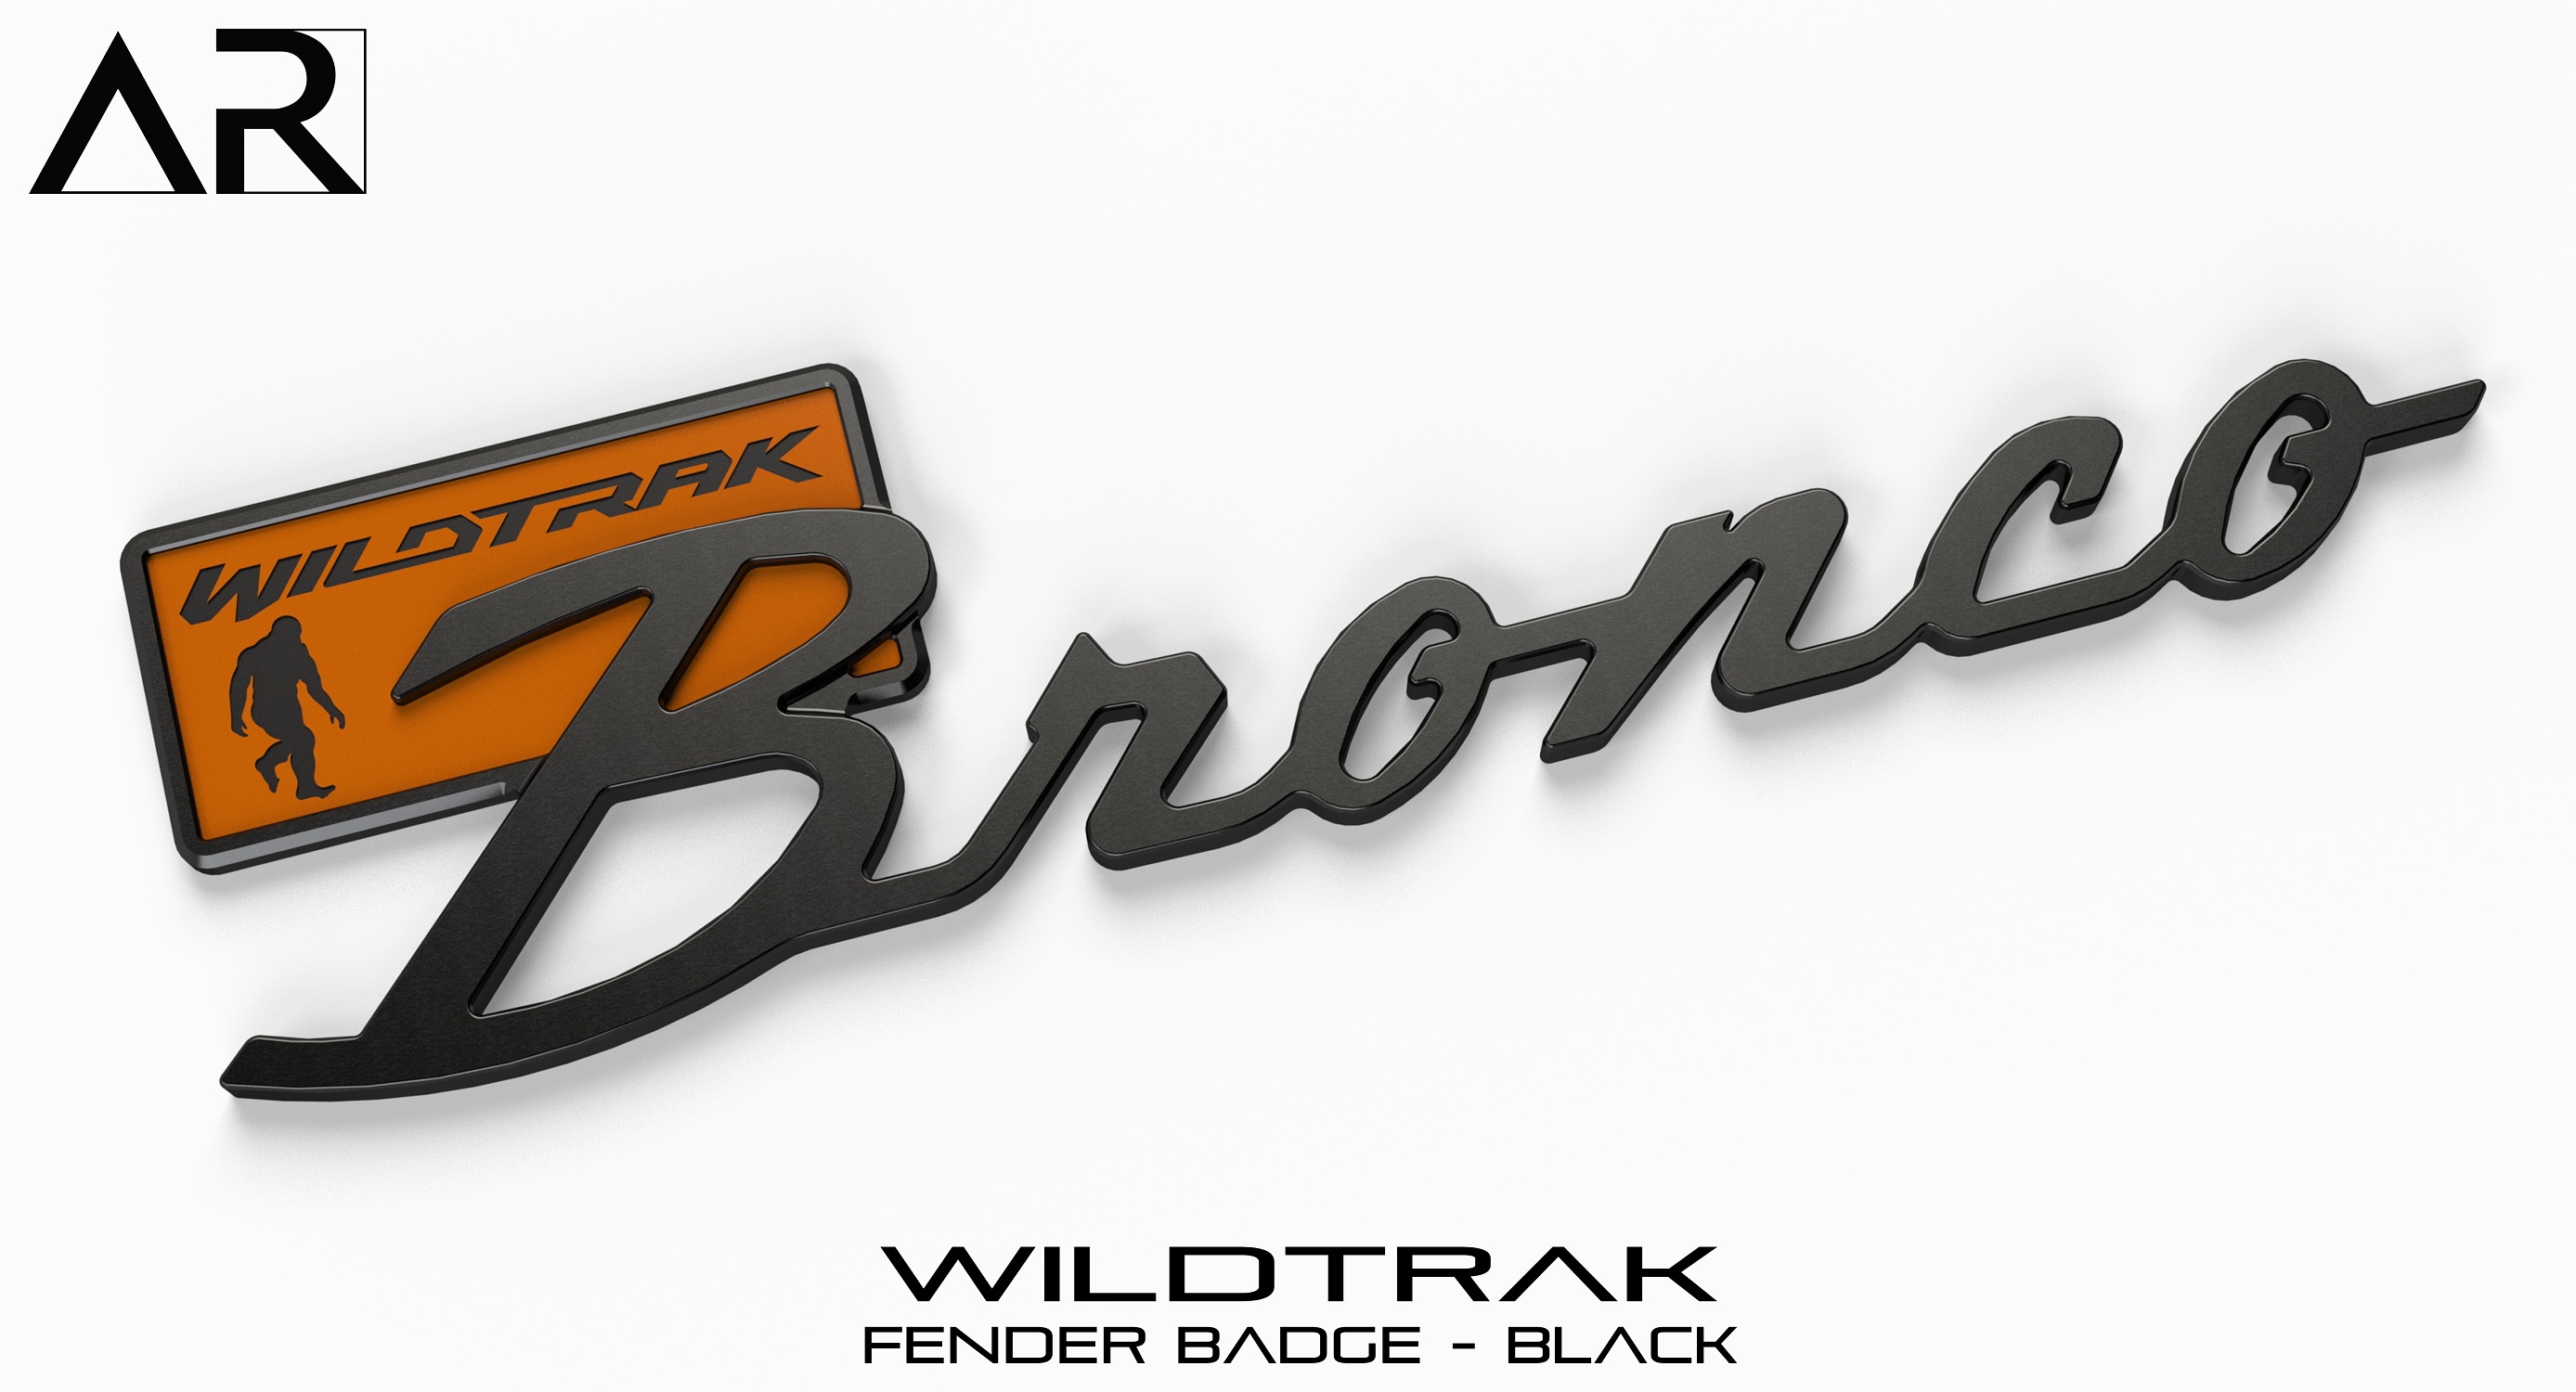 Ford Bronco AR | BRONCO CLASSIC DNA Fender Badge 1601005 - Fender Badge  - Wildtrak - Black